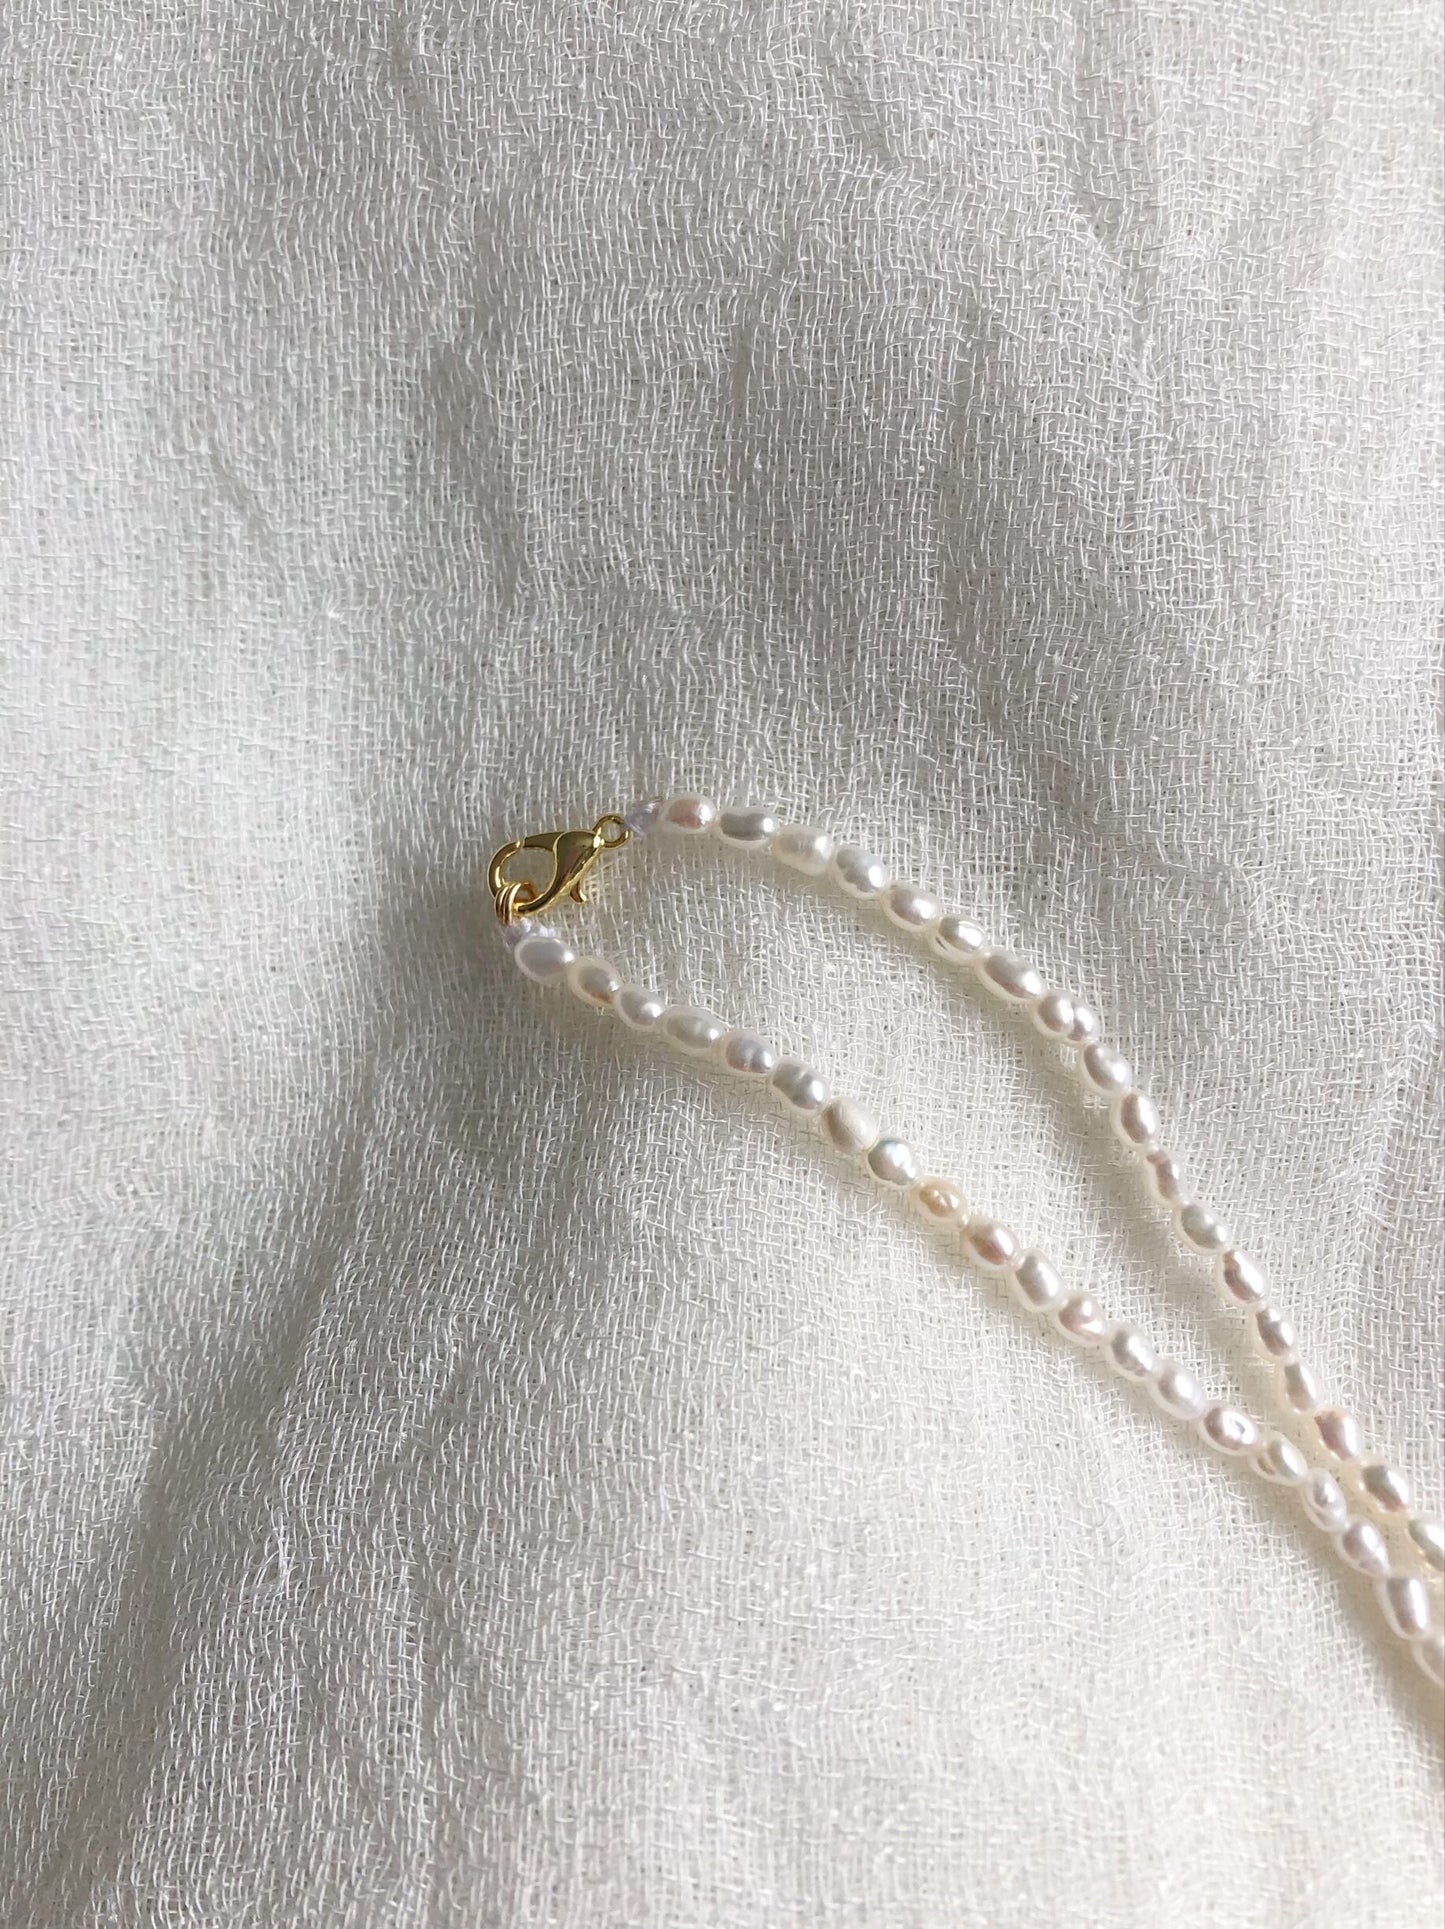 Heart pendant choker, keshi necklace, mother pearl necklace, keshi choker